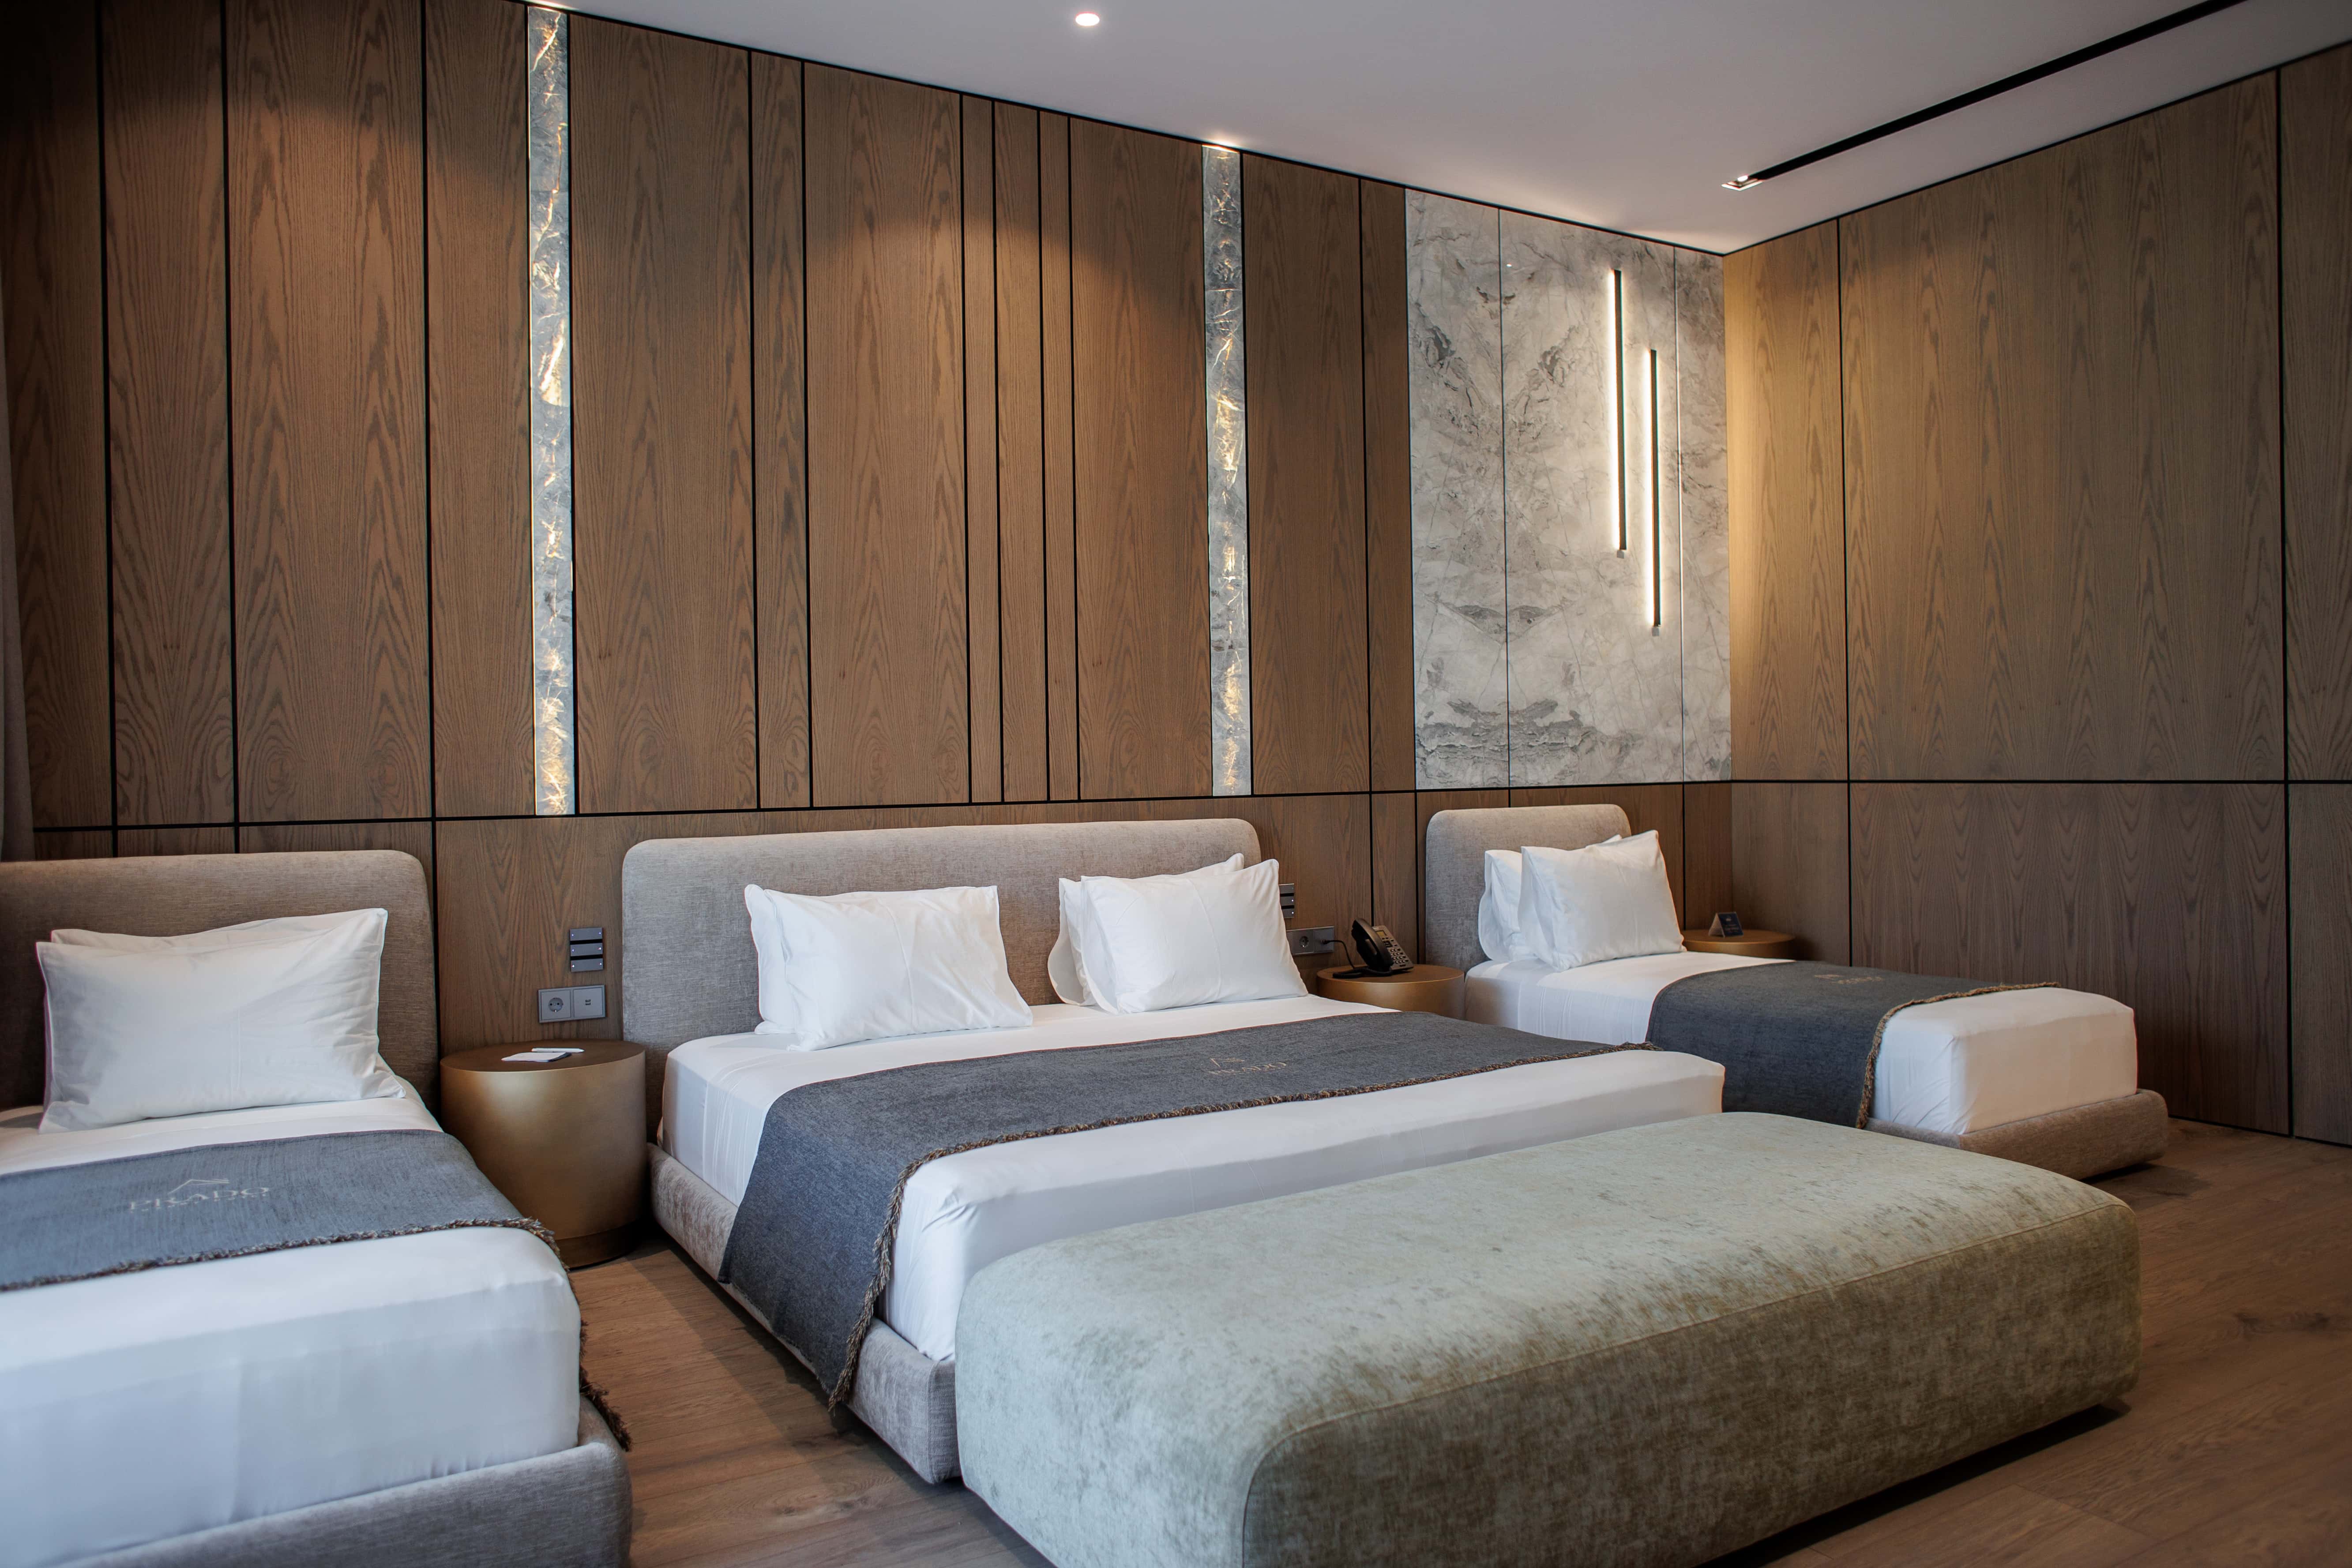 prado_luxury_hotel_room_family_suite_beds_view_lights